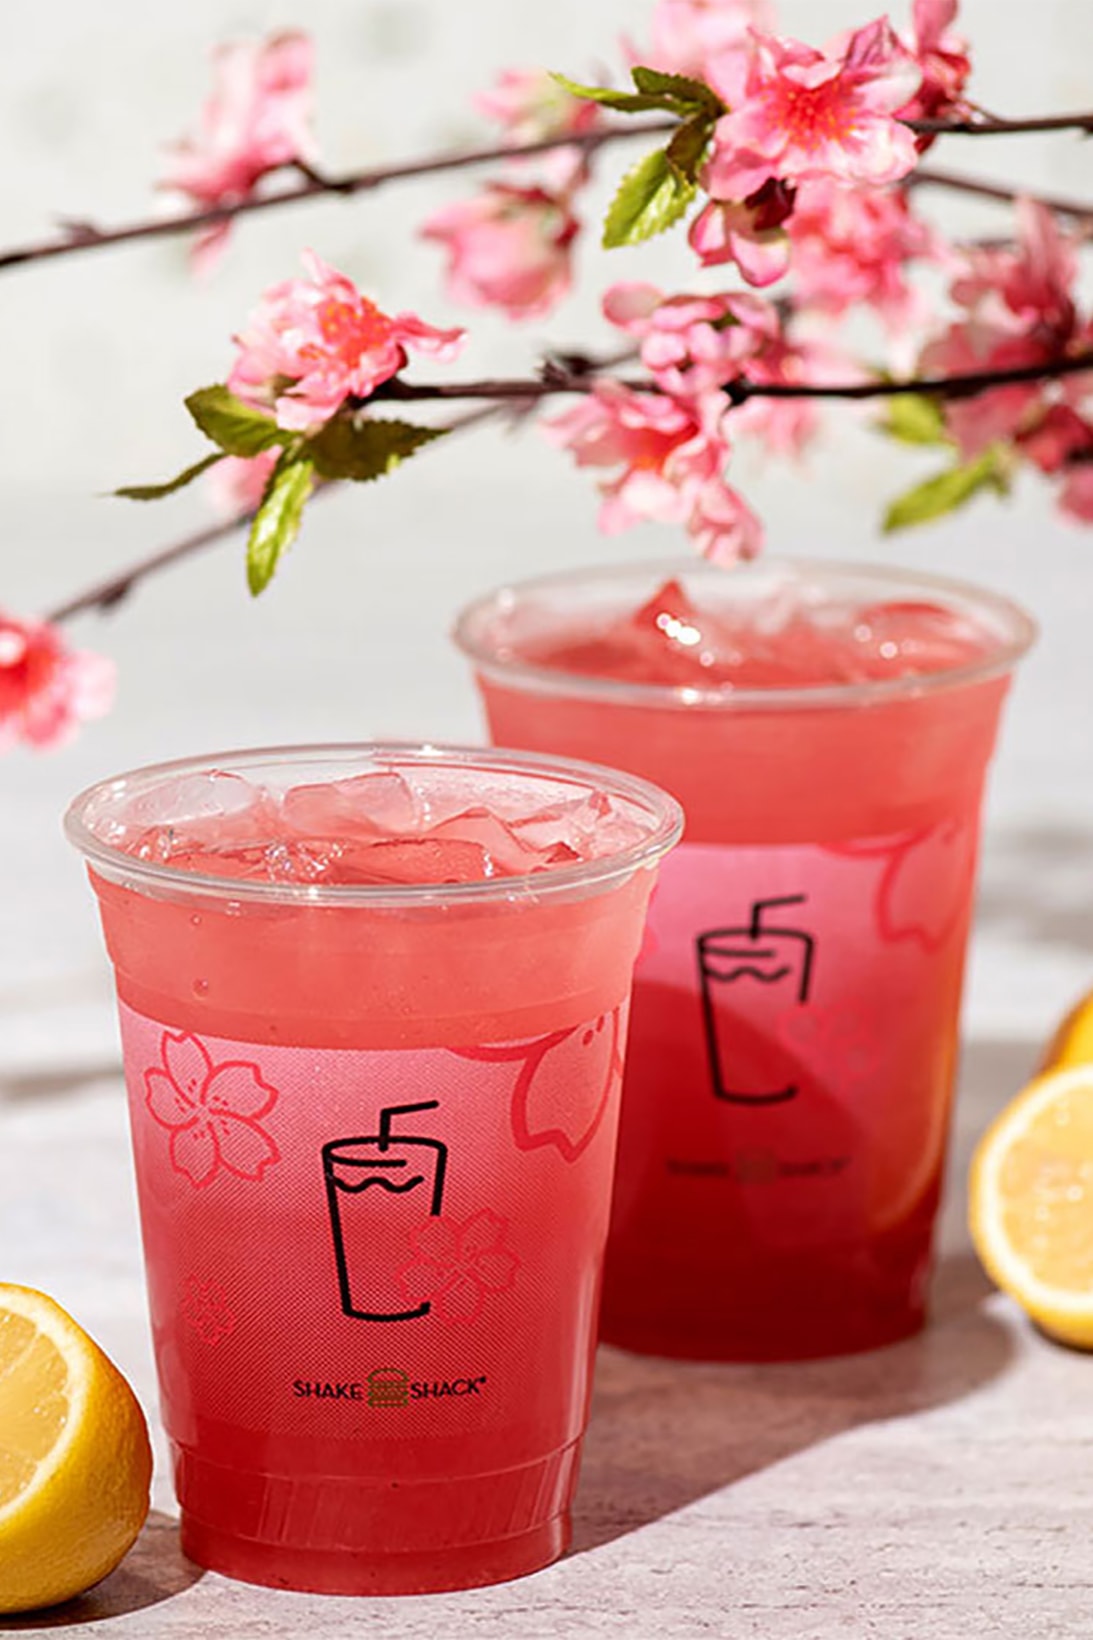 shake shack japan sakura cherry blossom drinks shack-ura lemonade pink